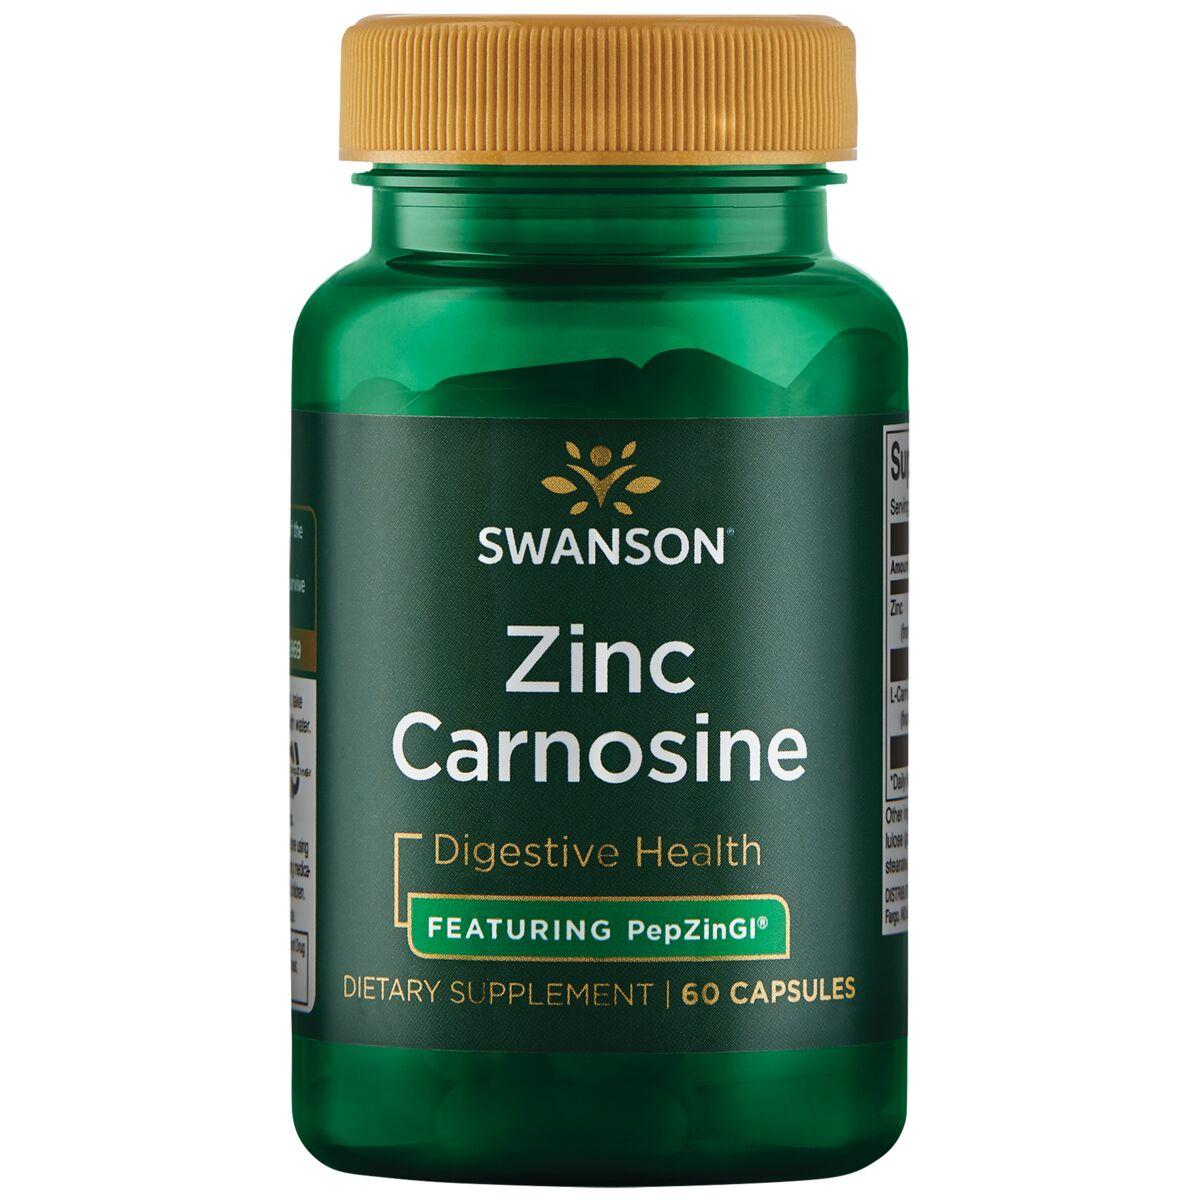 Swanson Ultra Zinc Carnosine - Featuring Pepzingi Vitamin | 60 Caps